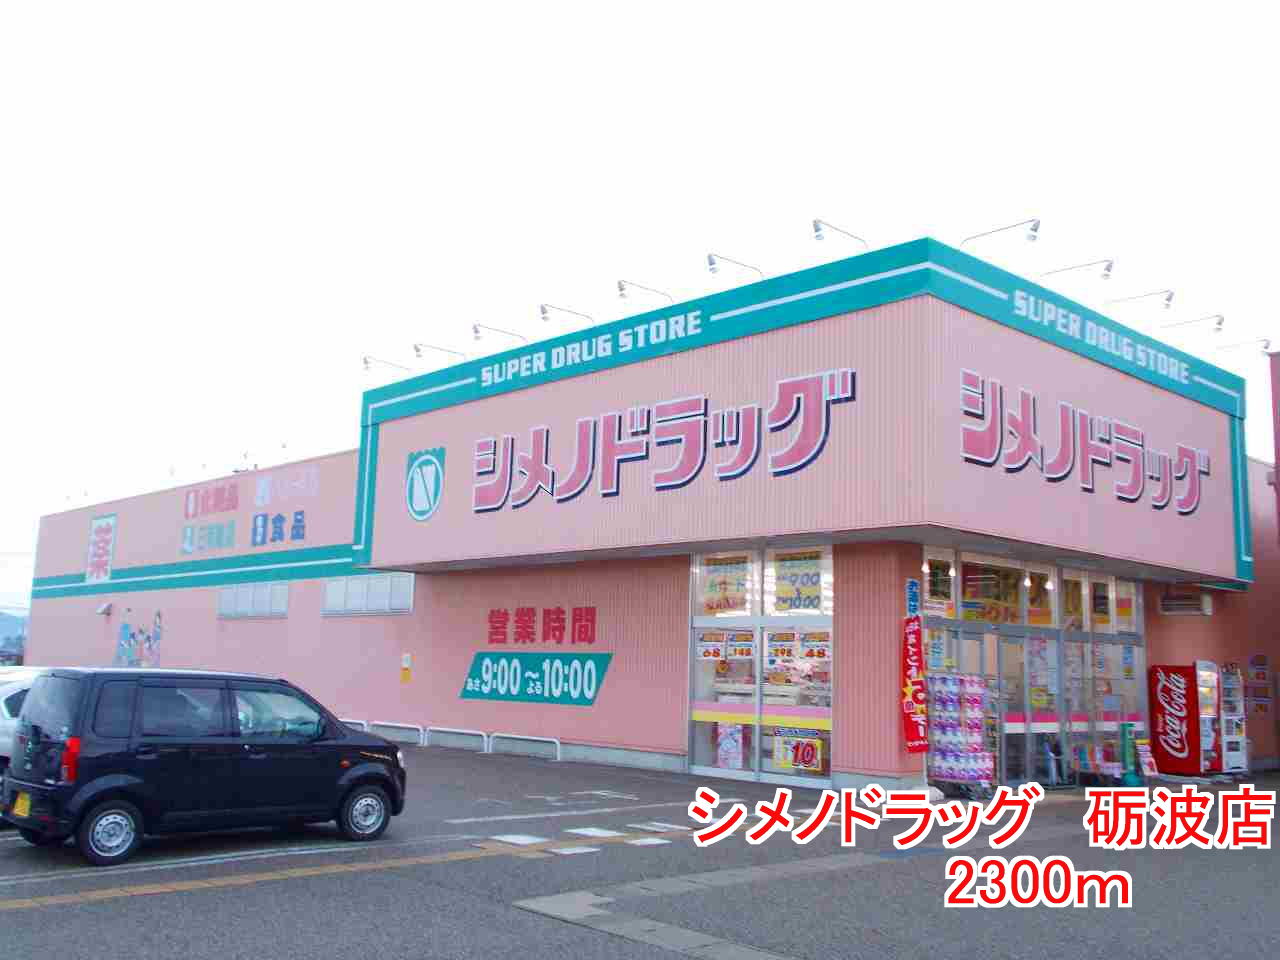 Dorakkusutoa. Shimeno drag Tonami shop 2300m until (drugstore)